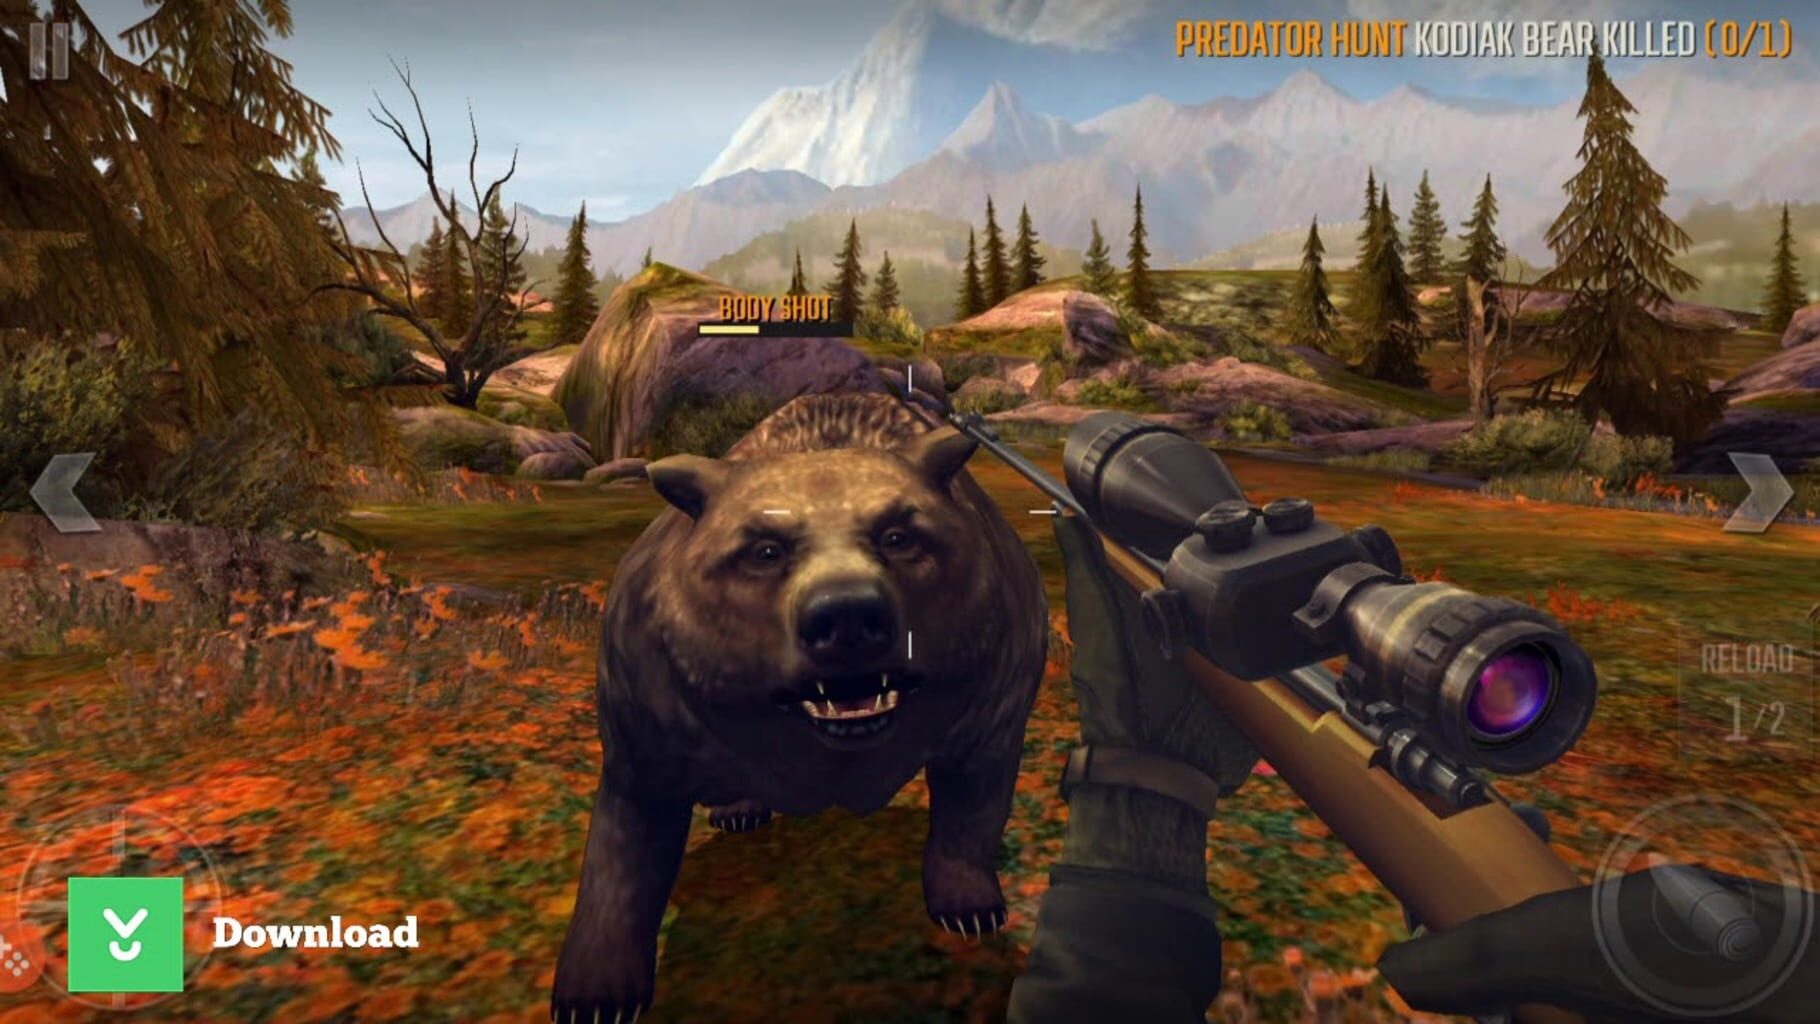 Deer Hunter 2018 screenshots